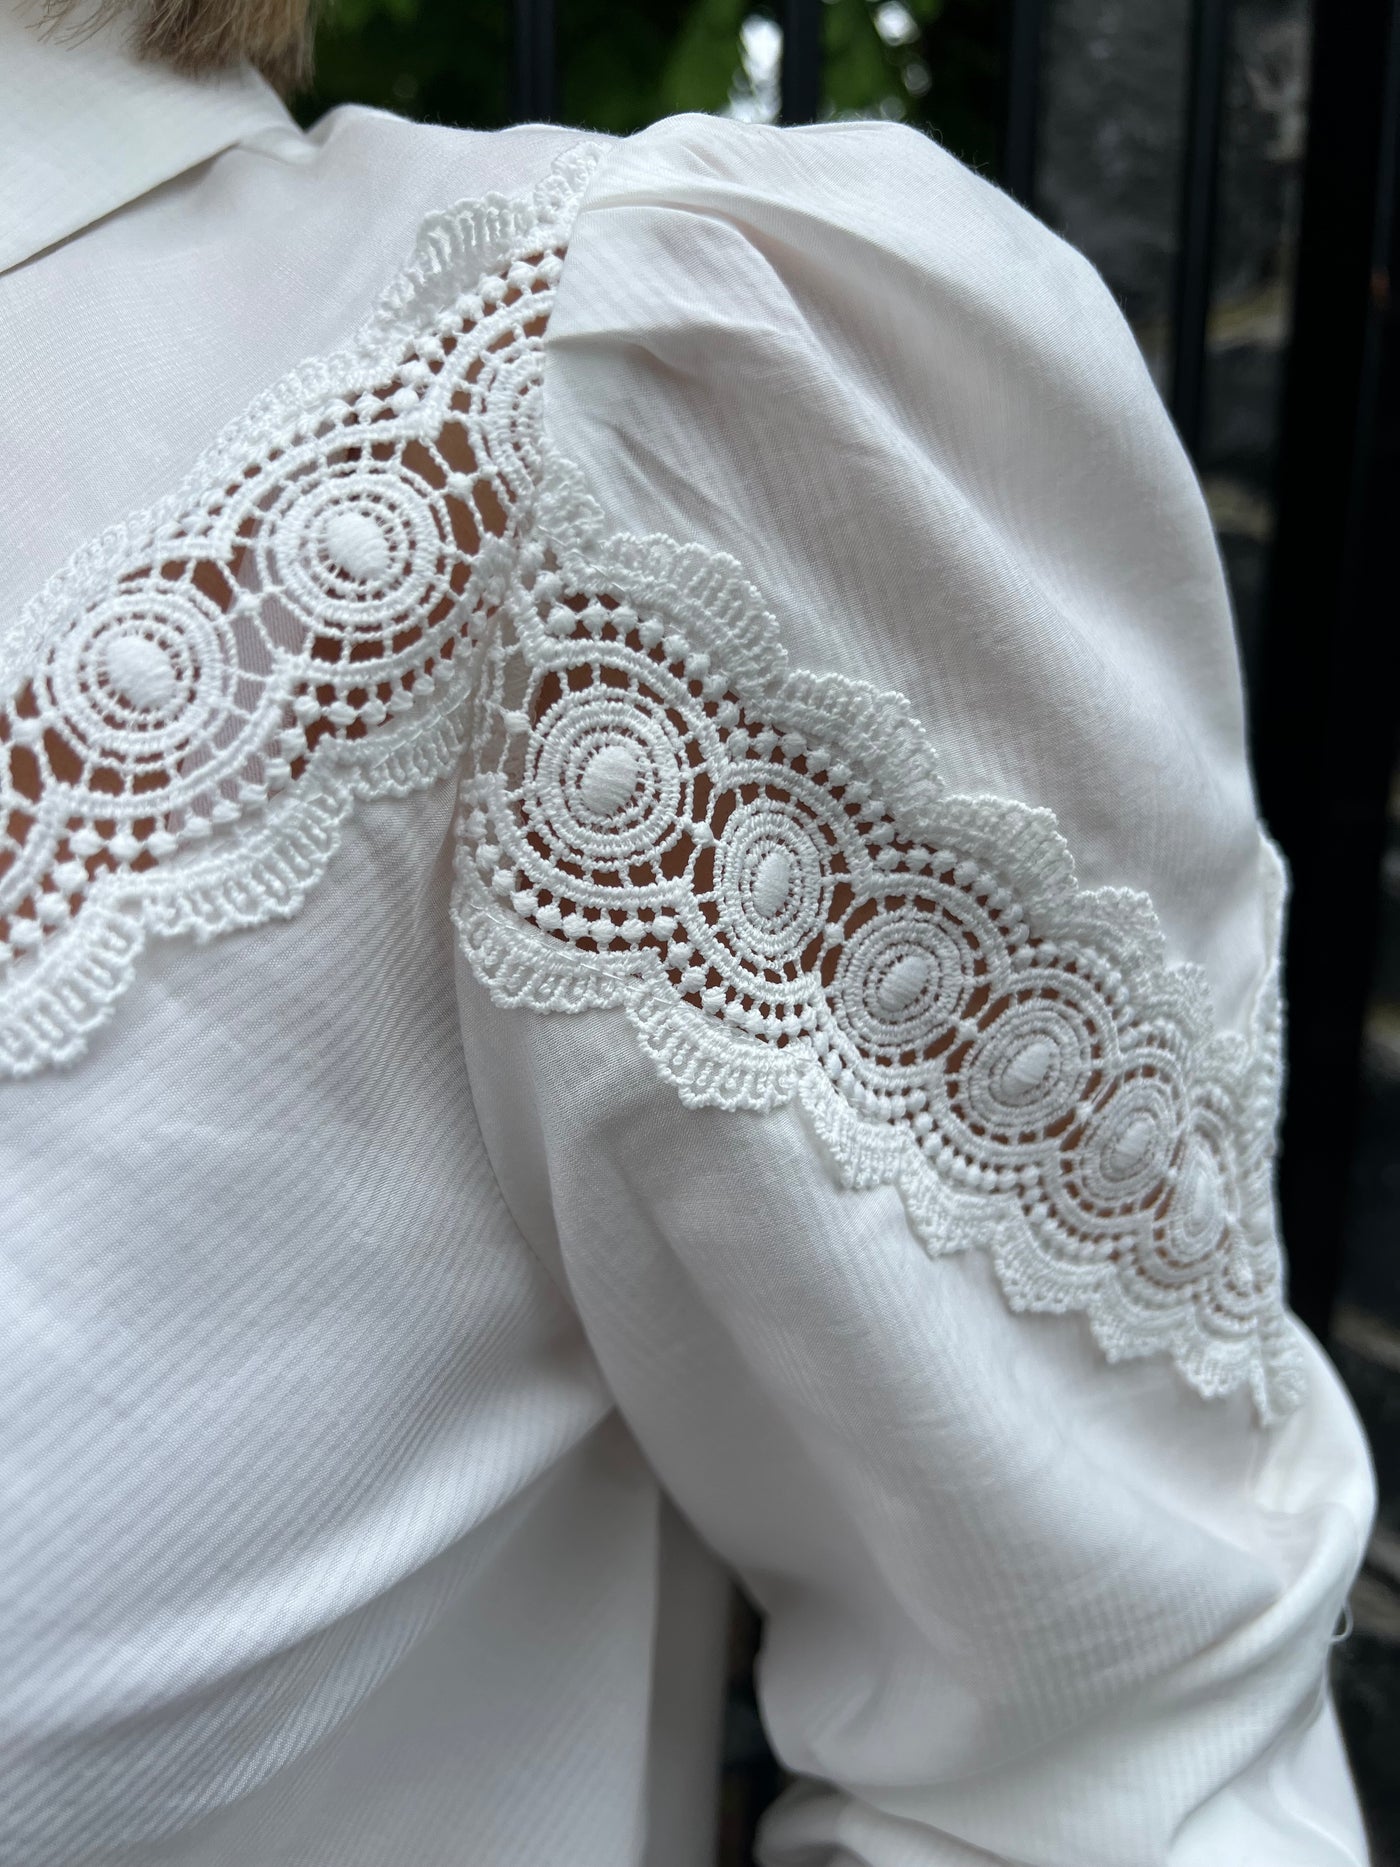 White Crochet Lace Button-Up Top 4350t